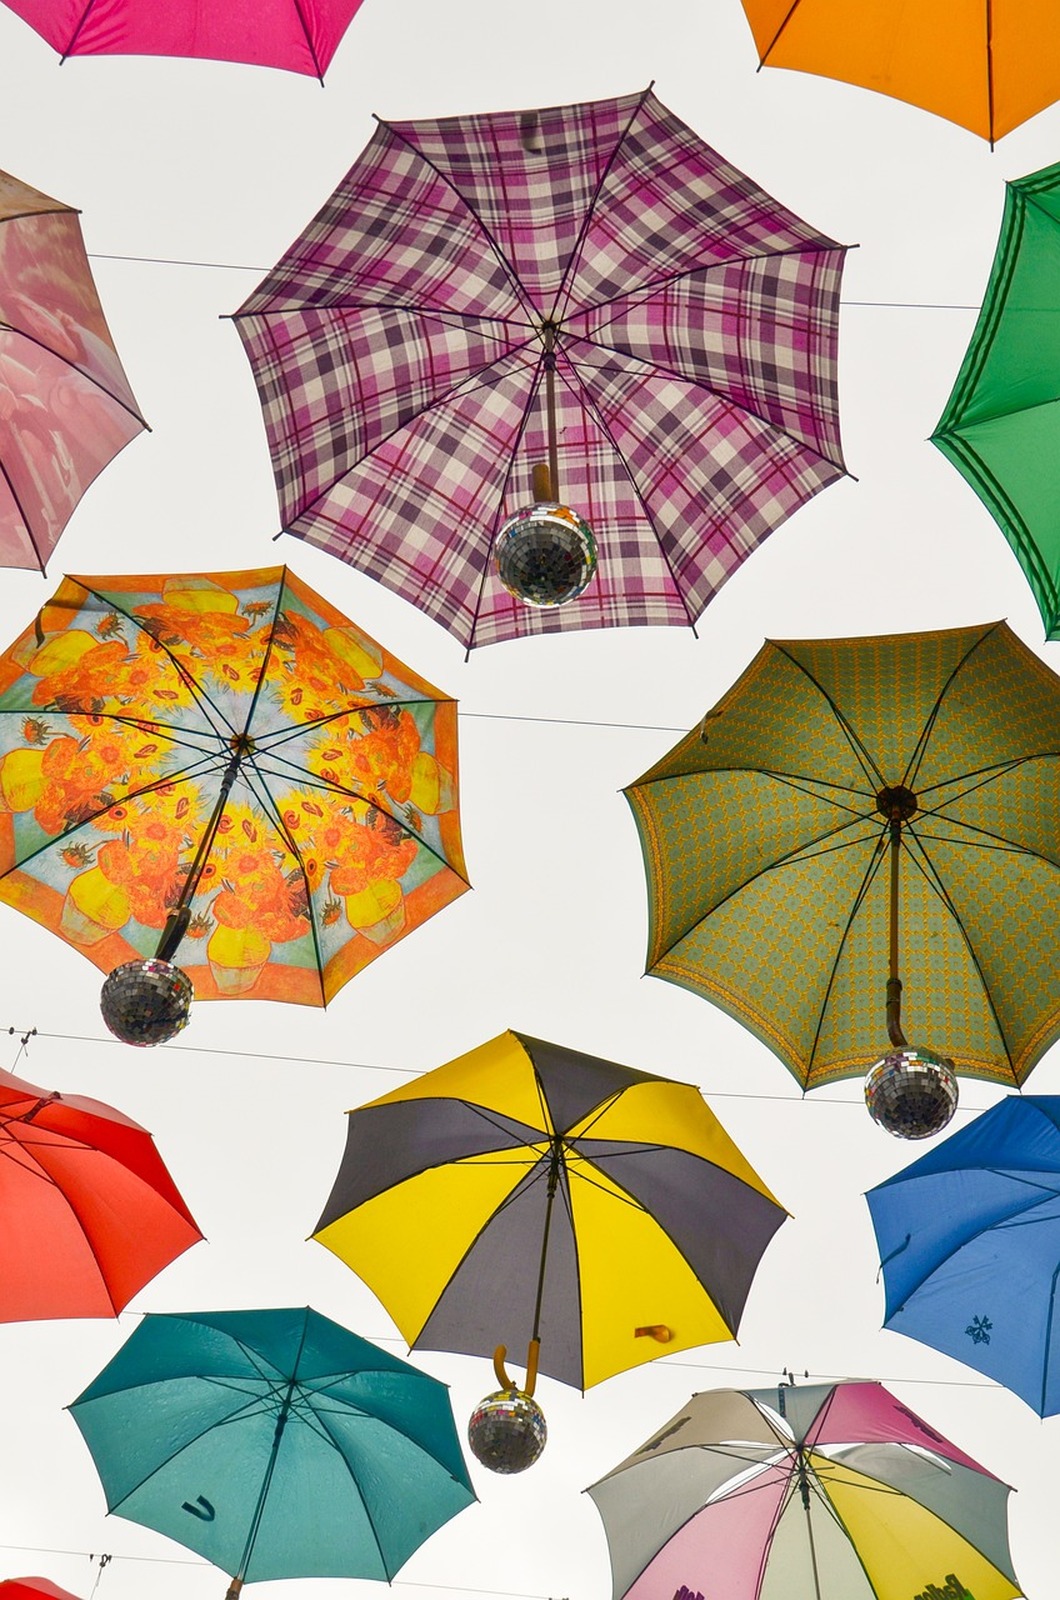 Image of Zurich Alley of Hanging Umbrellas by Team PhotoHound